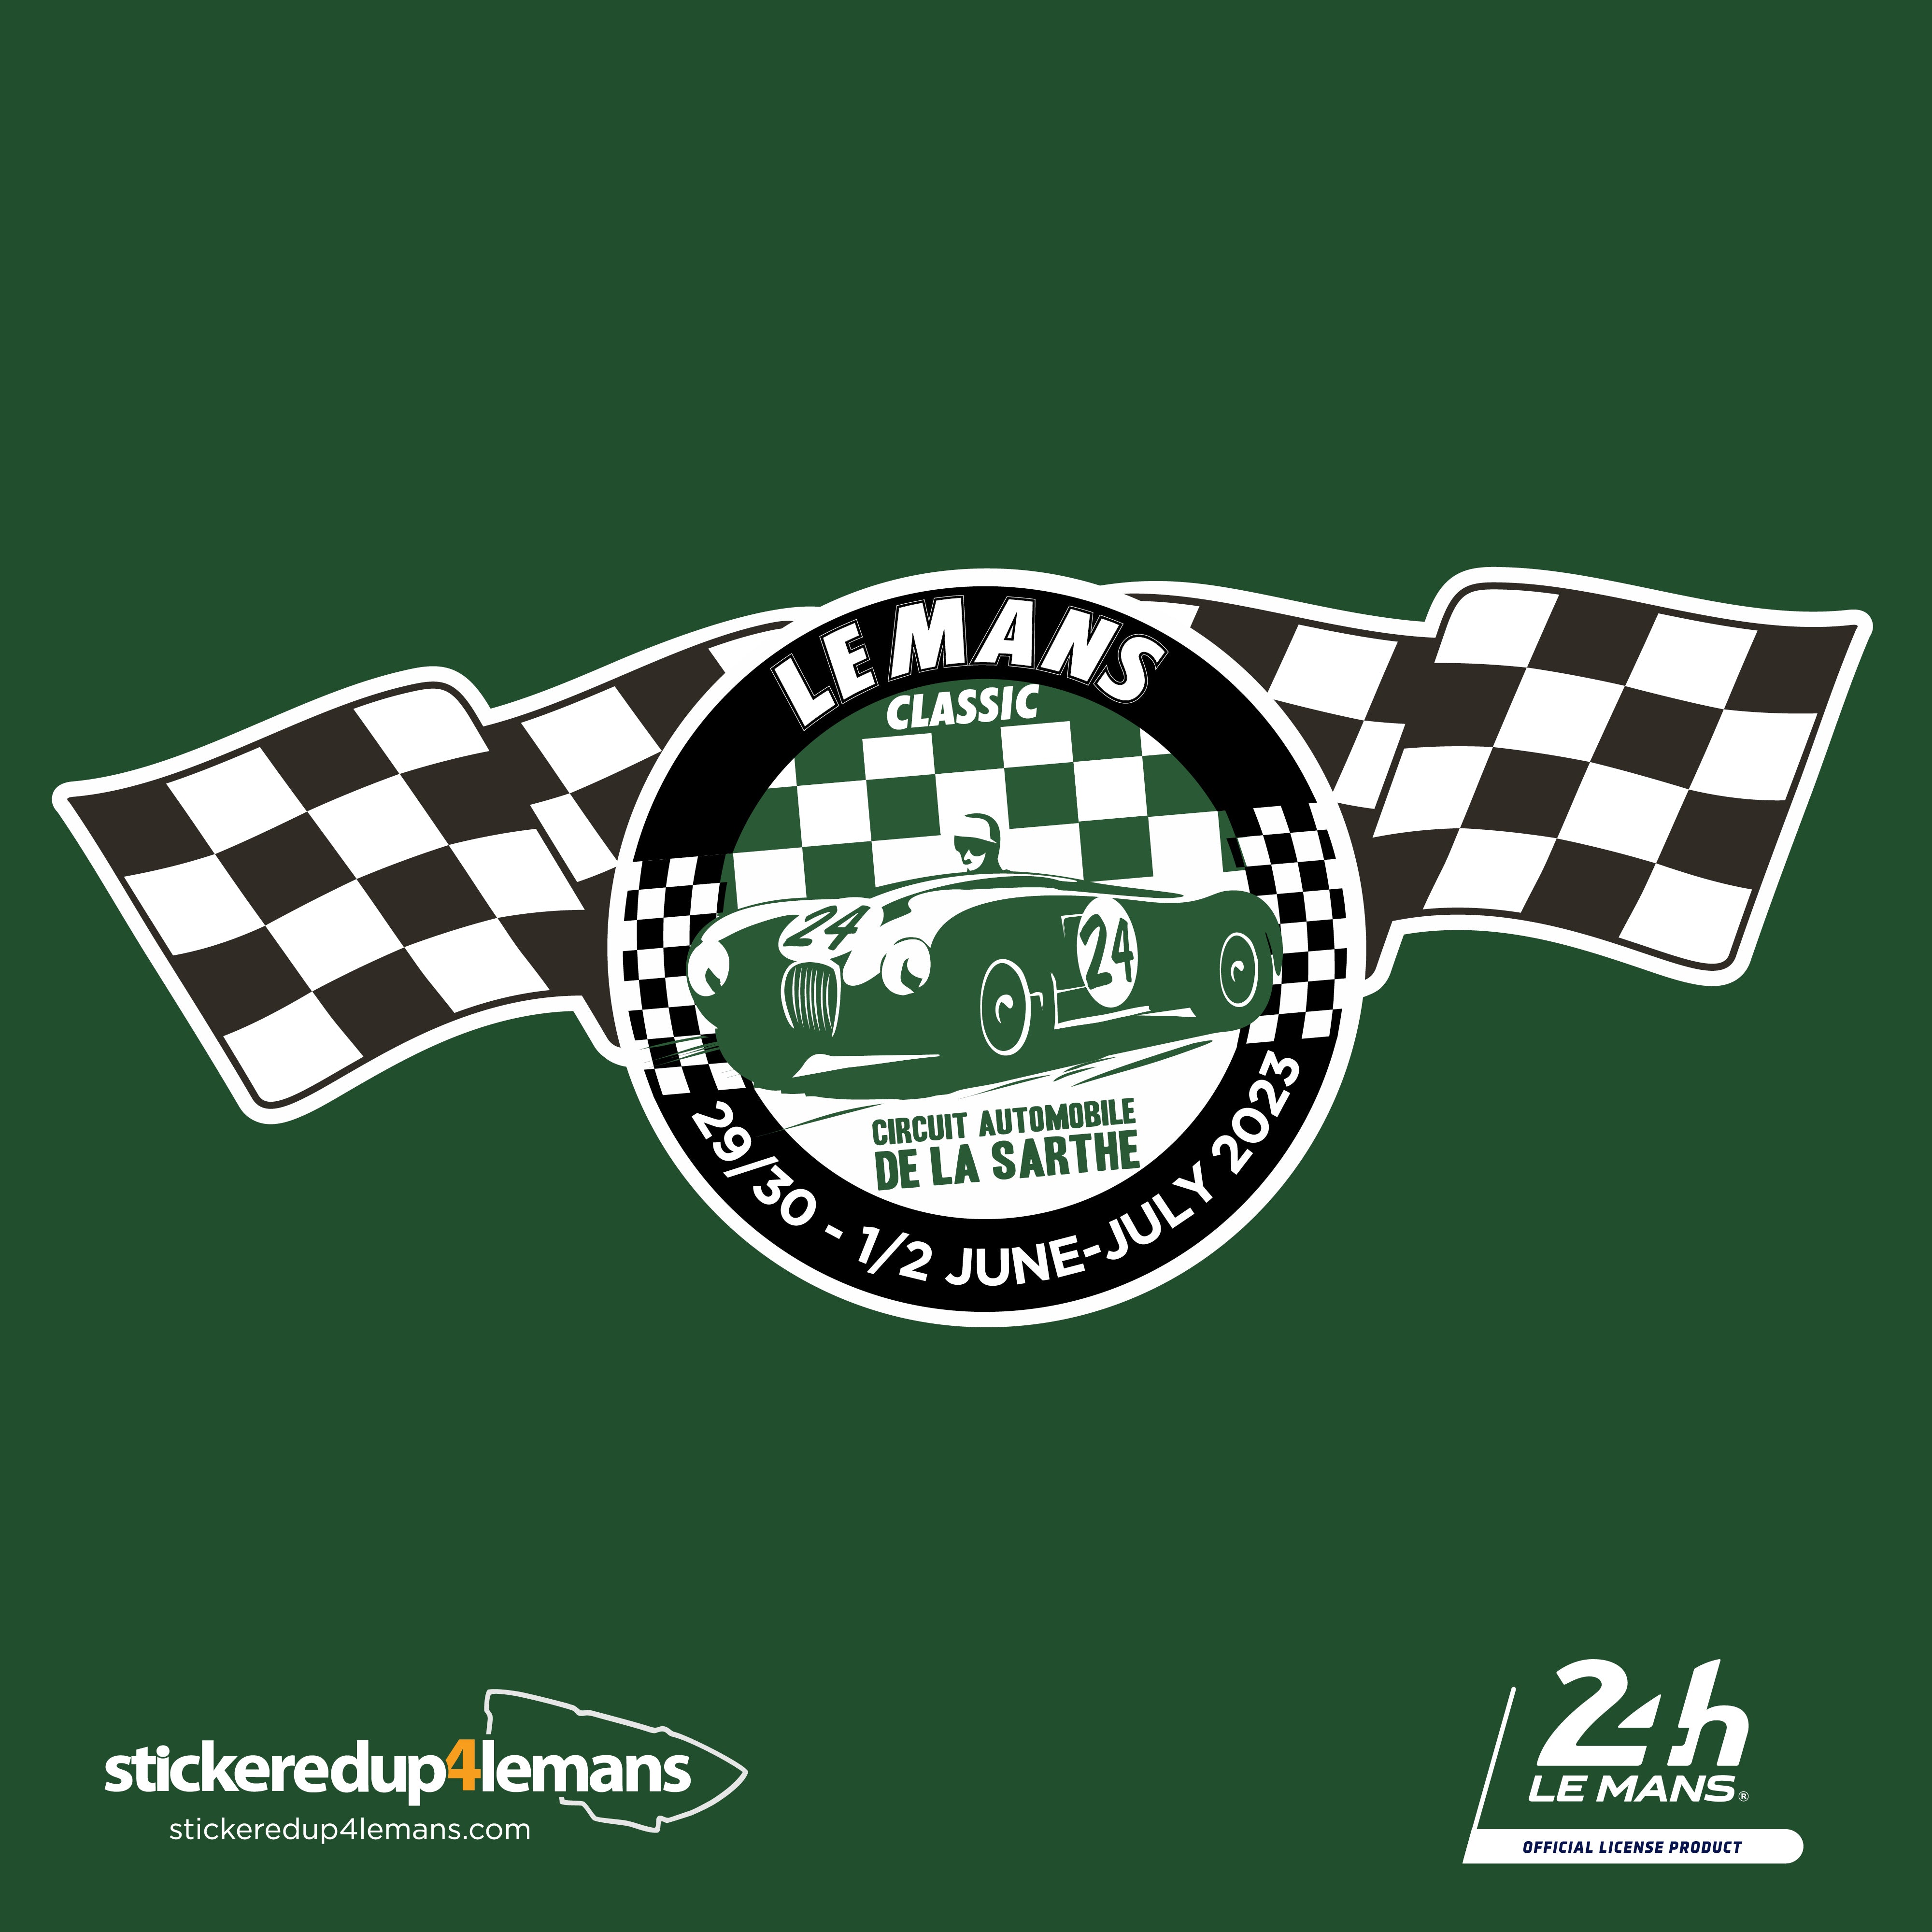 Le Mans Classic 2023 Chequered Flag Logo Sticker - StickeredUp4LeMans